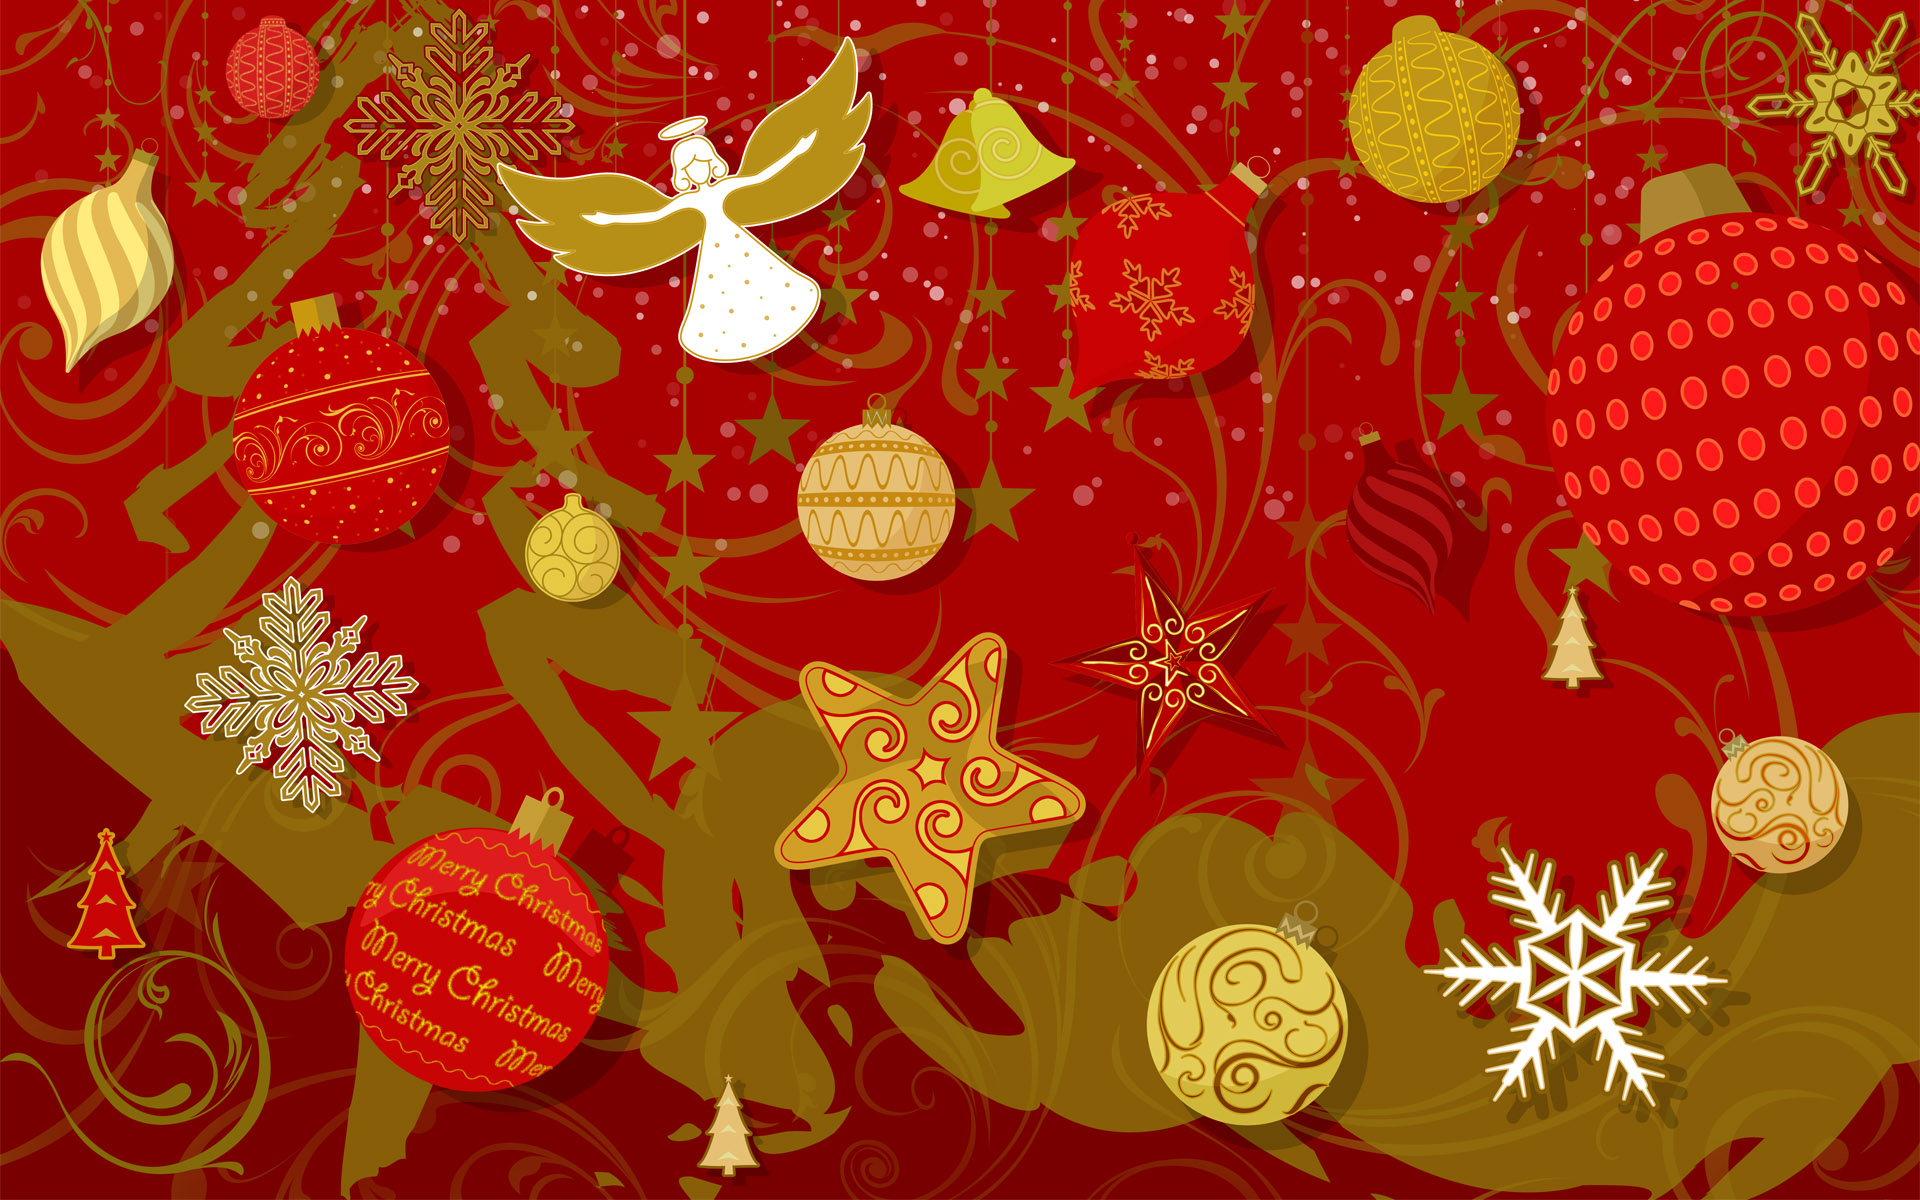 Previous, Holidays - Christmas wallpapers - Celebration of Christmas 